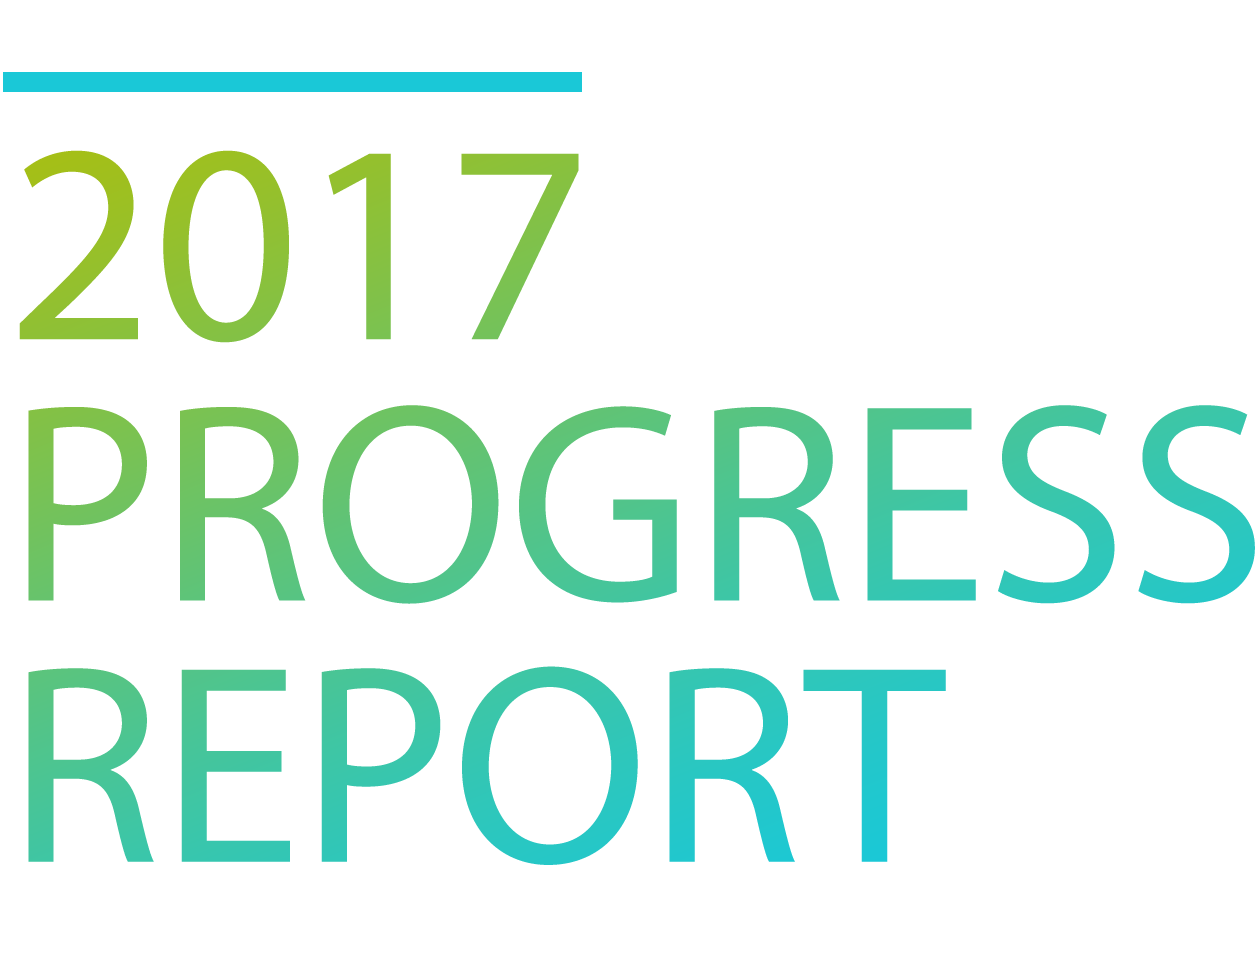 Pharmacy Technician Certification Board 2017 Year-End Progress Report: Choose Excellence.